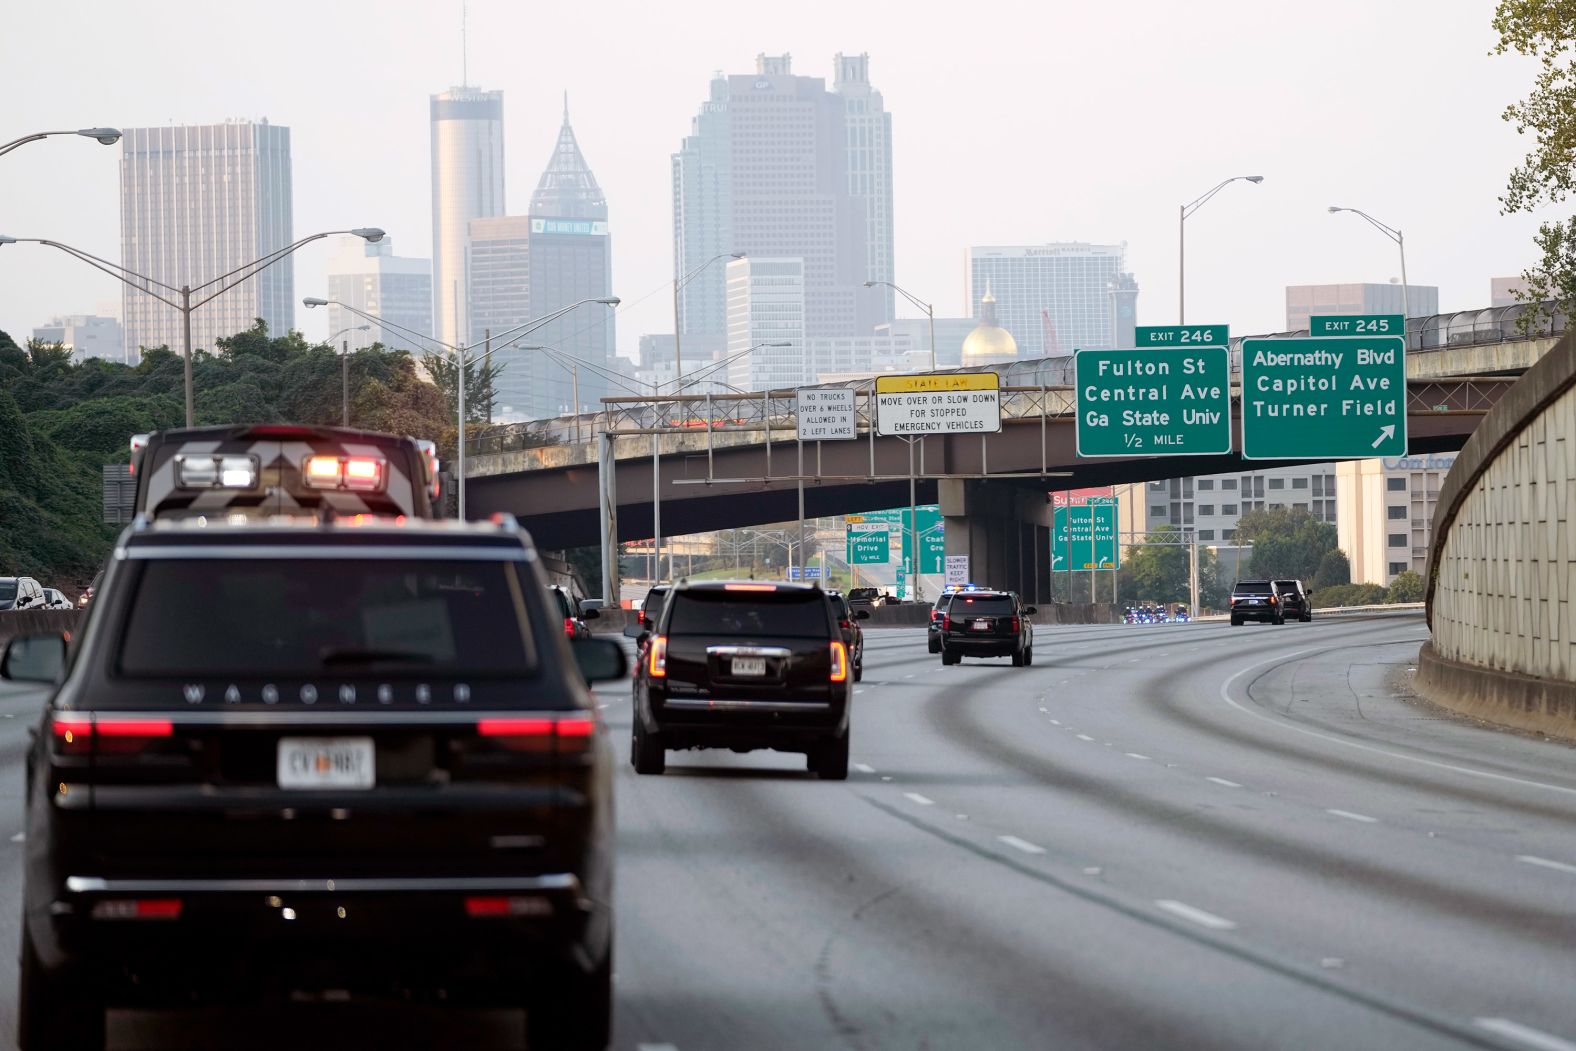 Trump's motorcade travels through Atlanta on Thursday.